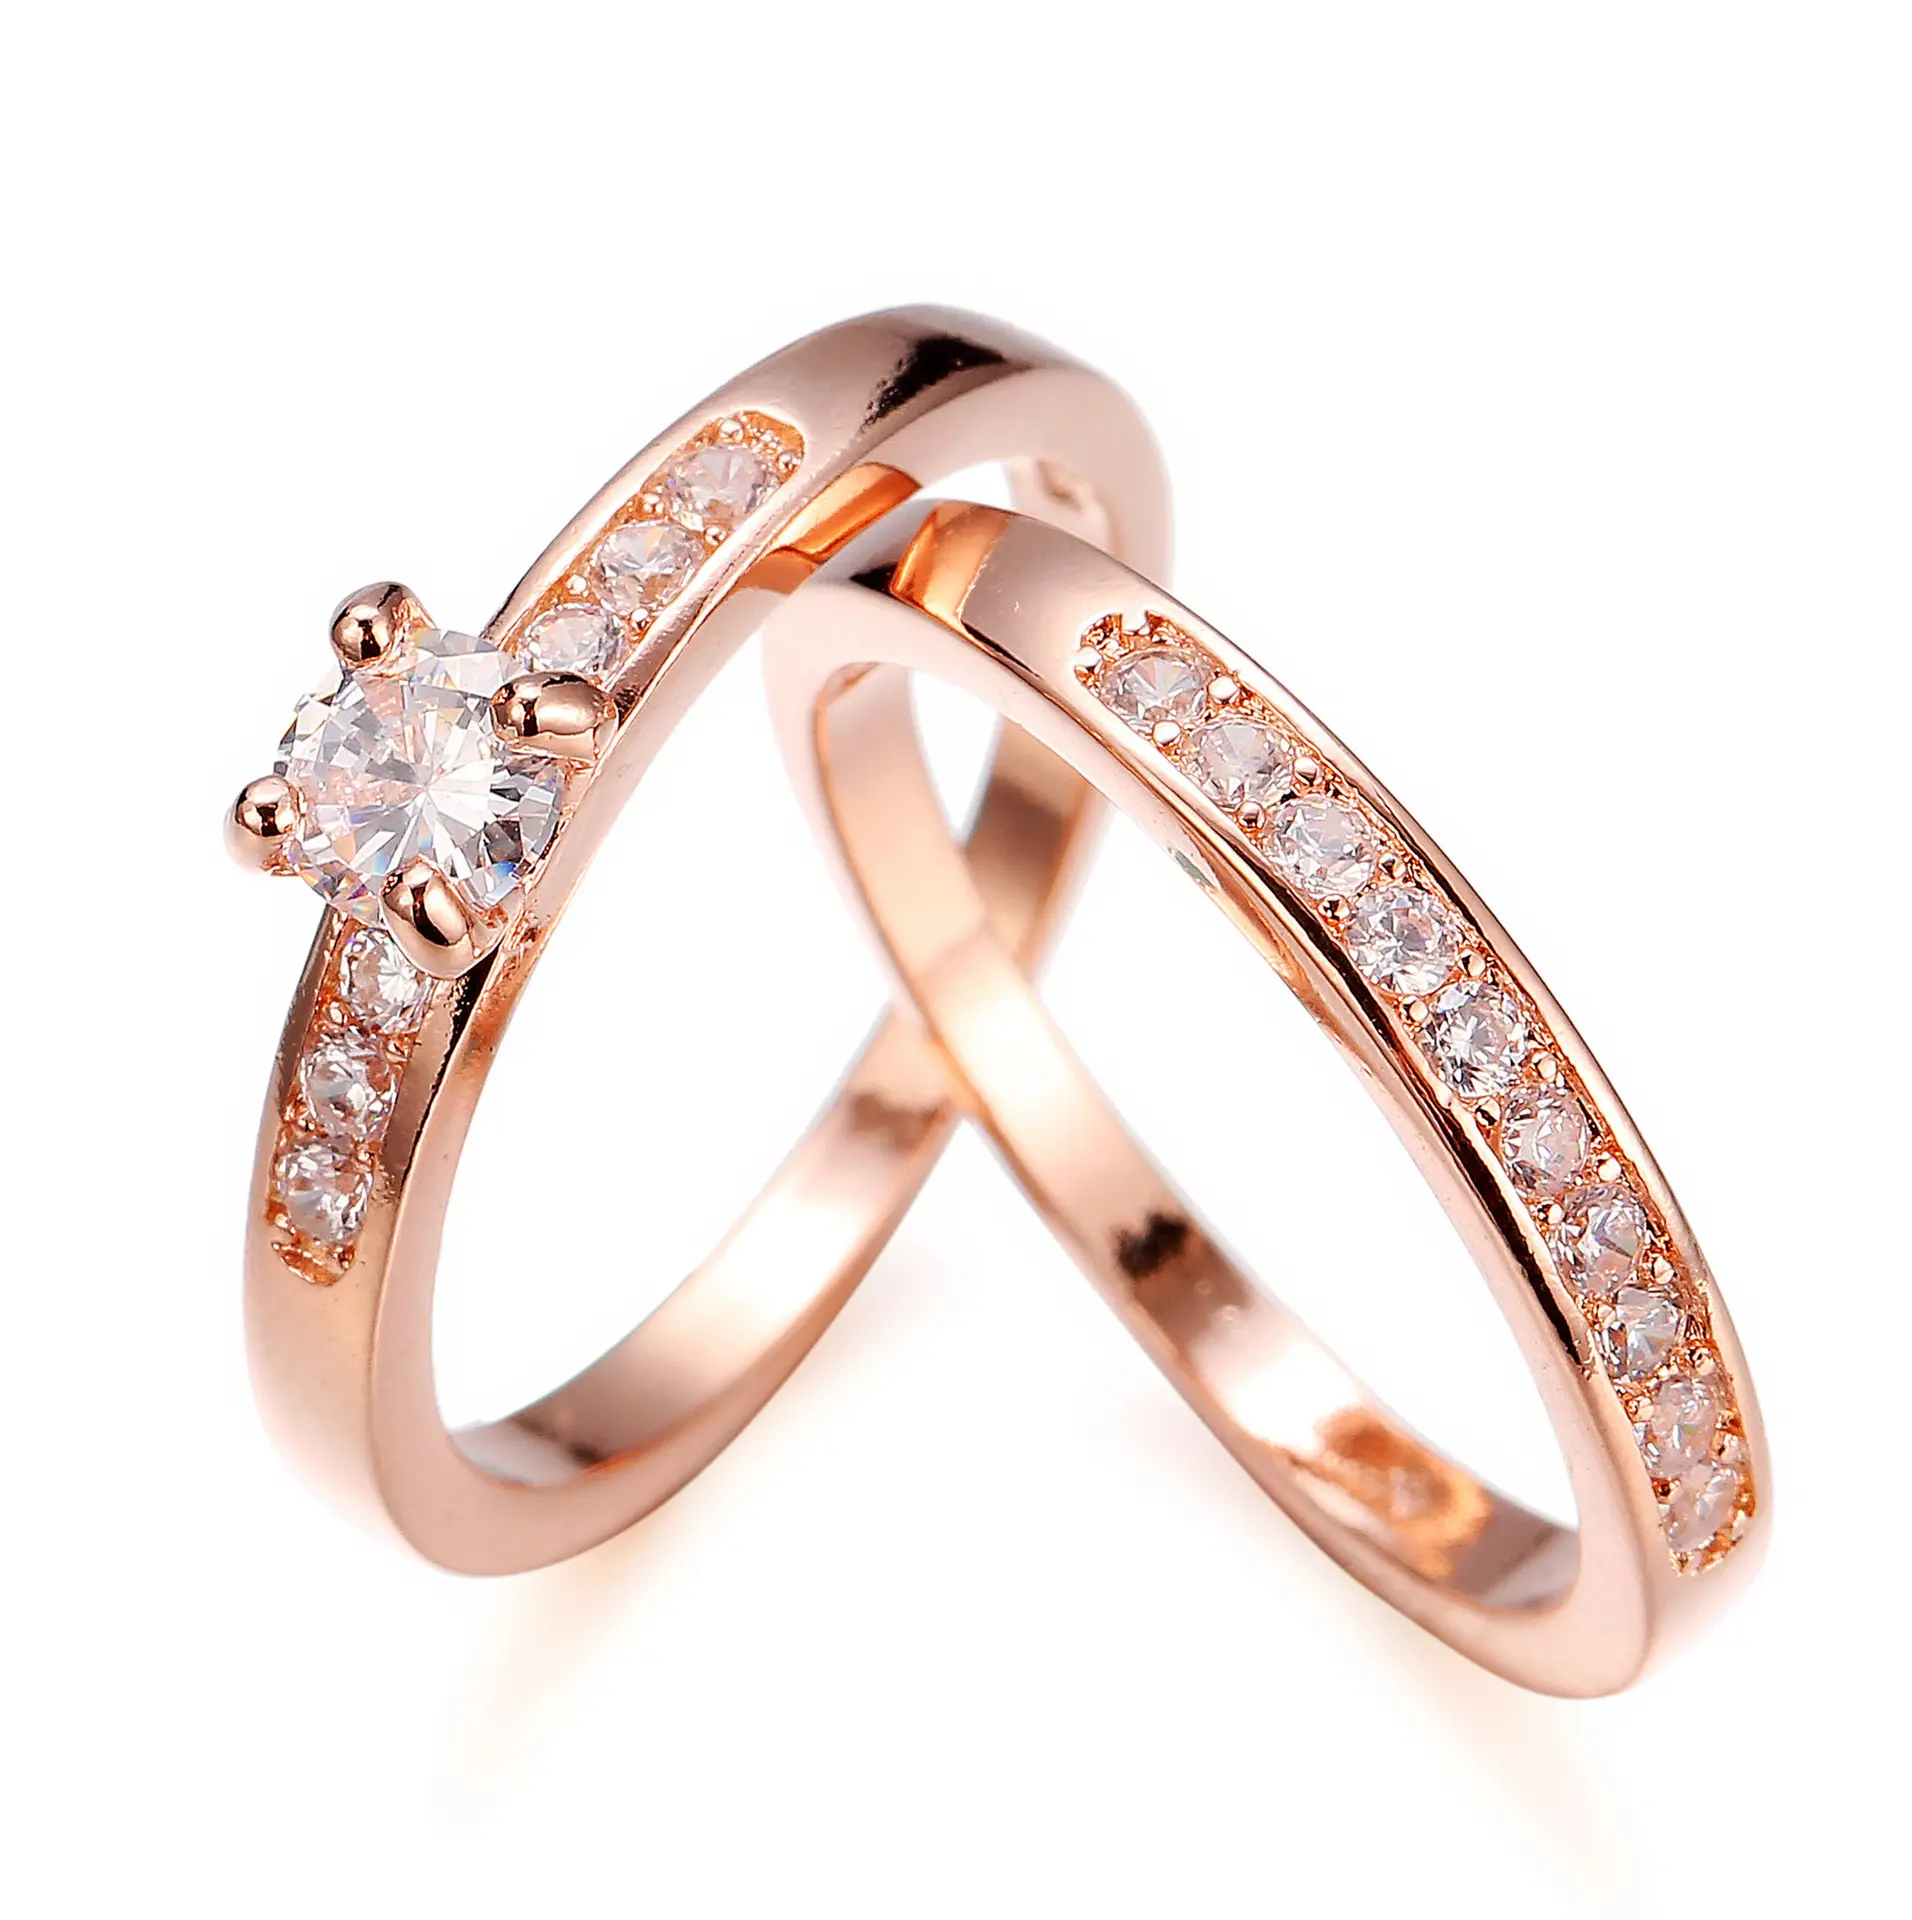 Amazon Hot Selling Rose Gold Plated Zircon Couple Ring Set Wedding Band Crystal Diamond Rings Fashion Jewelry